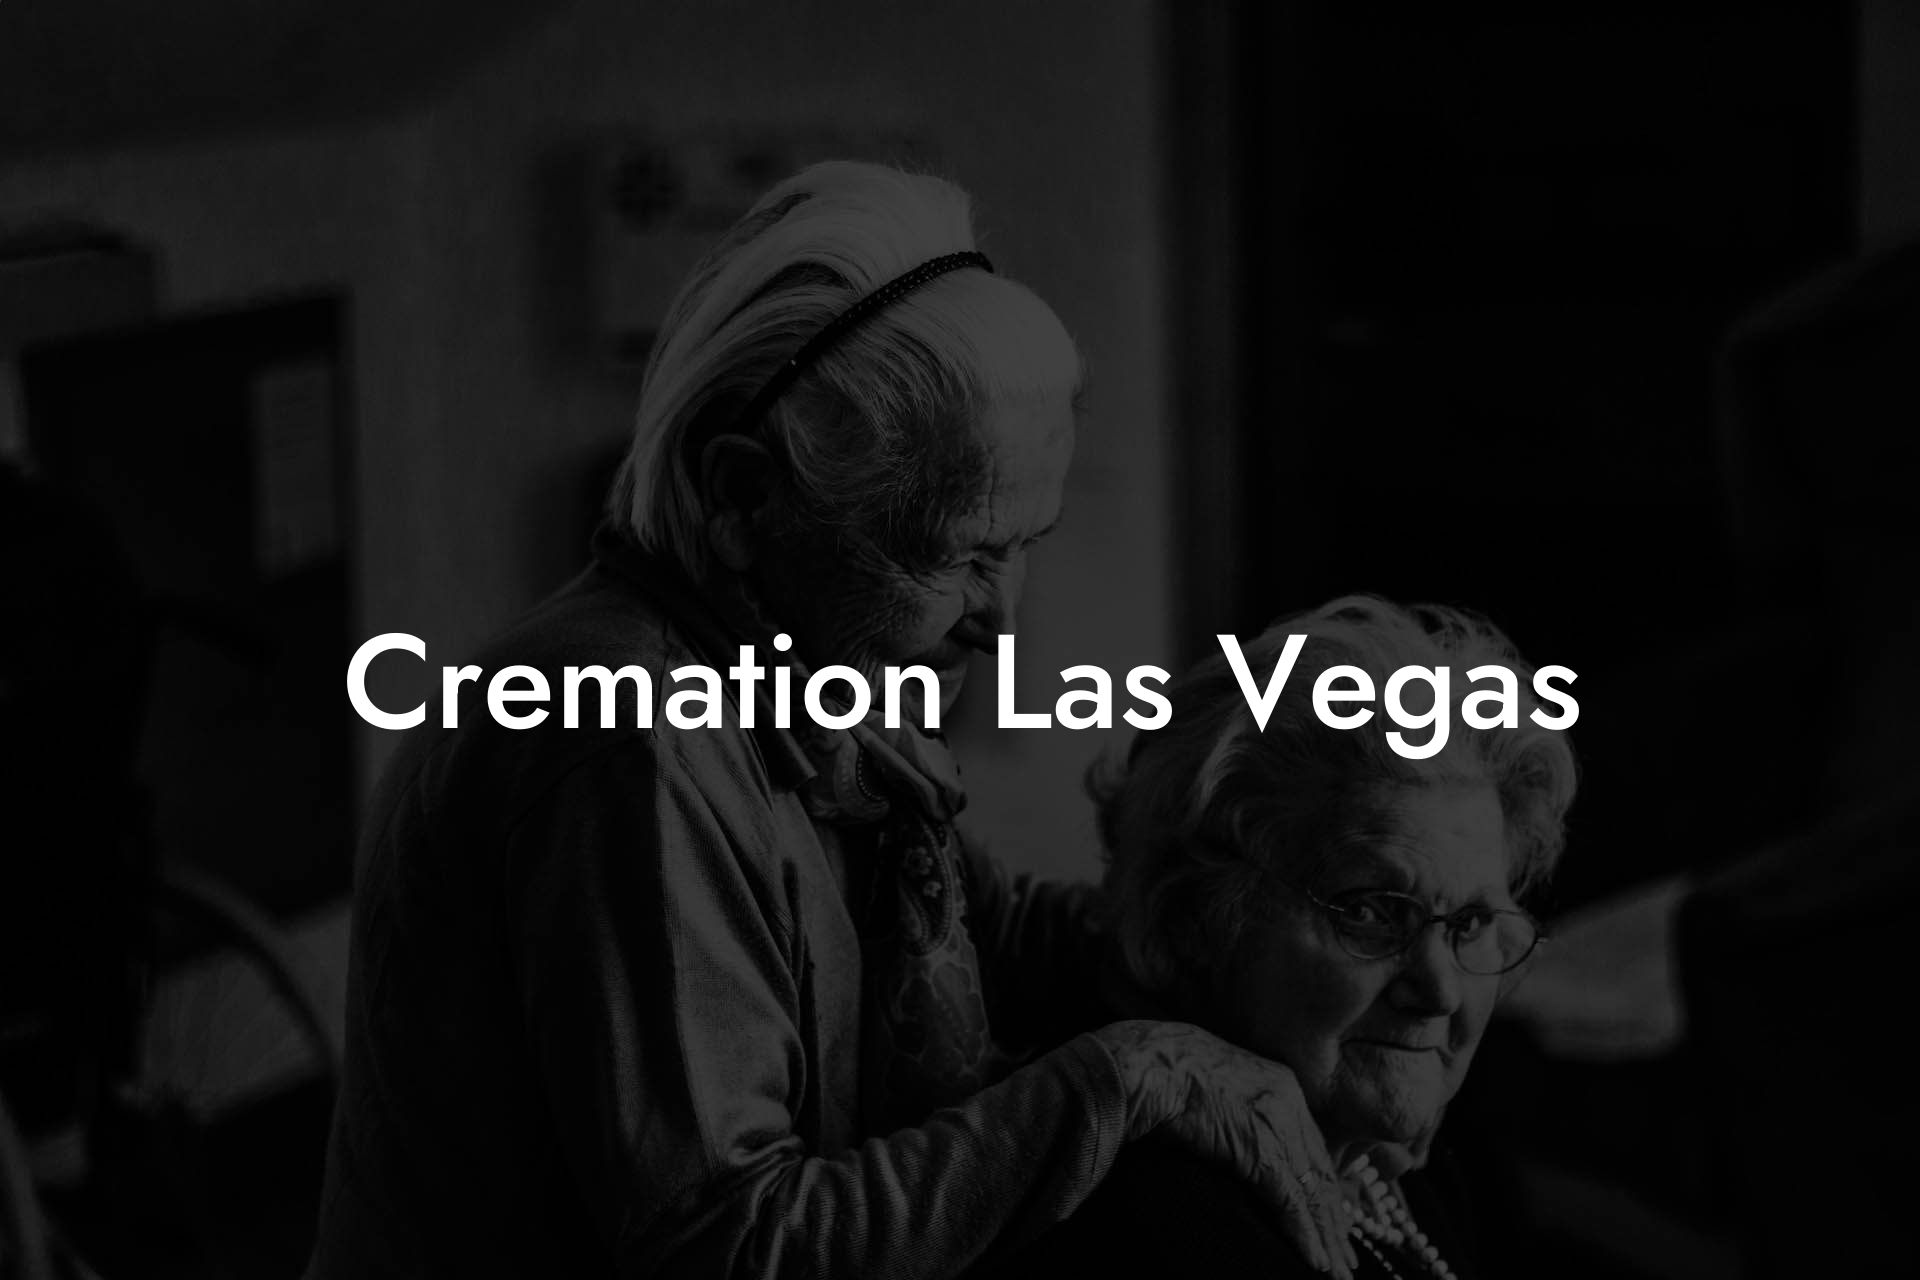 Cremation Las Vegas